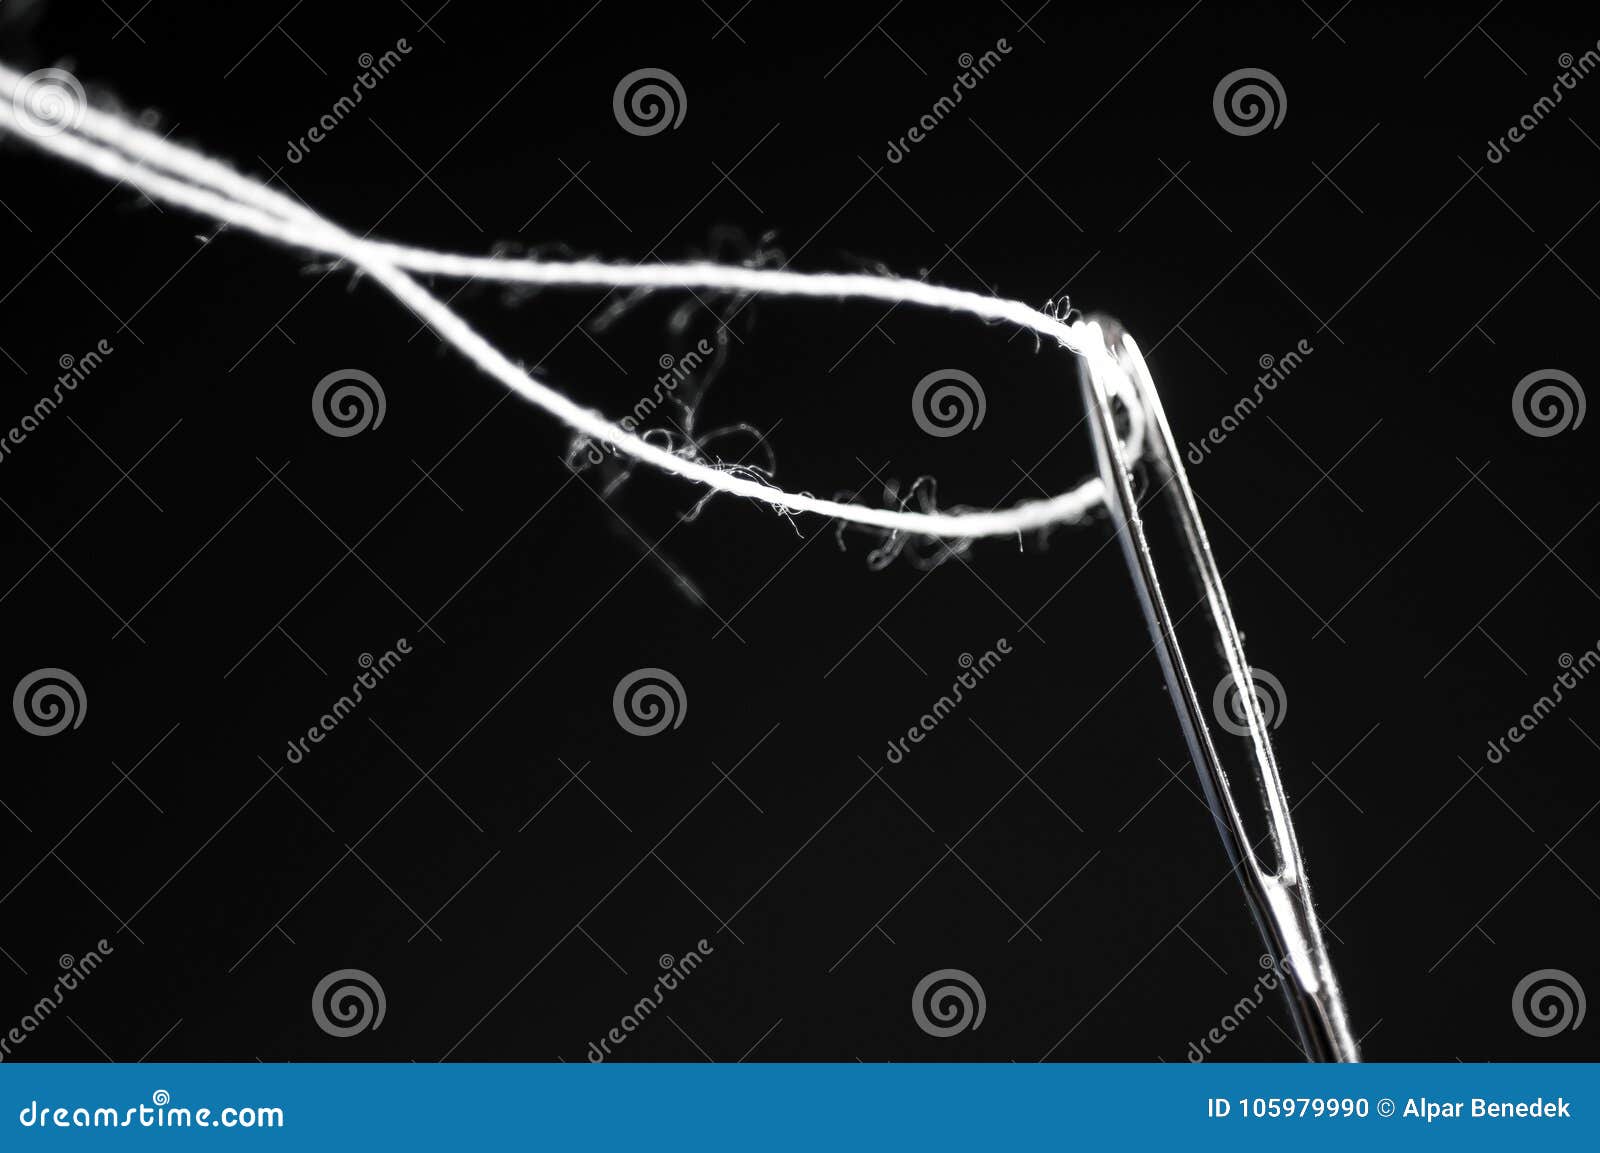 Sewing Needle Macro Shot with White Threat. Stock Photo - Image of ...